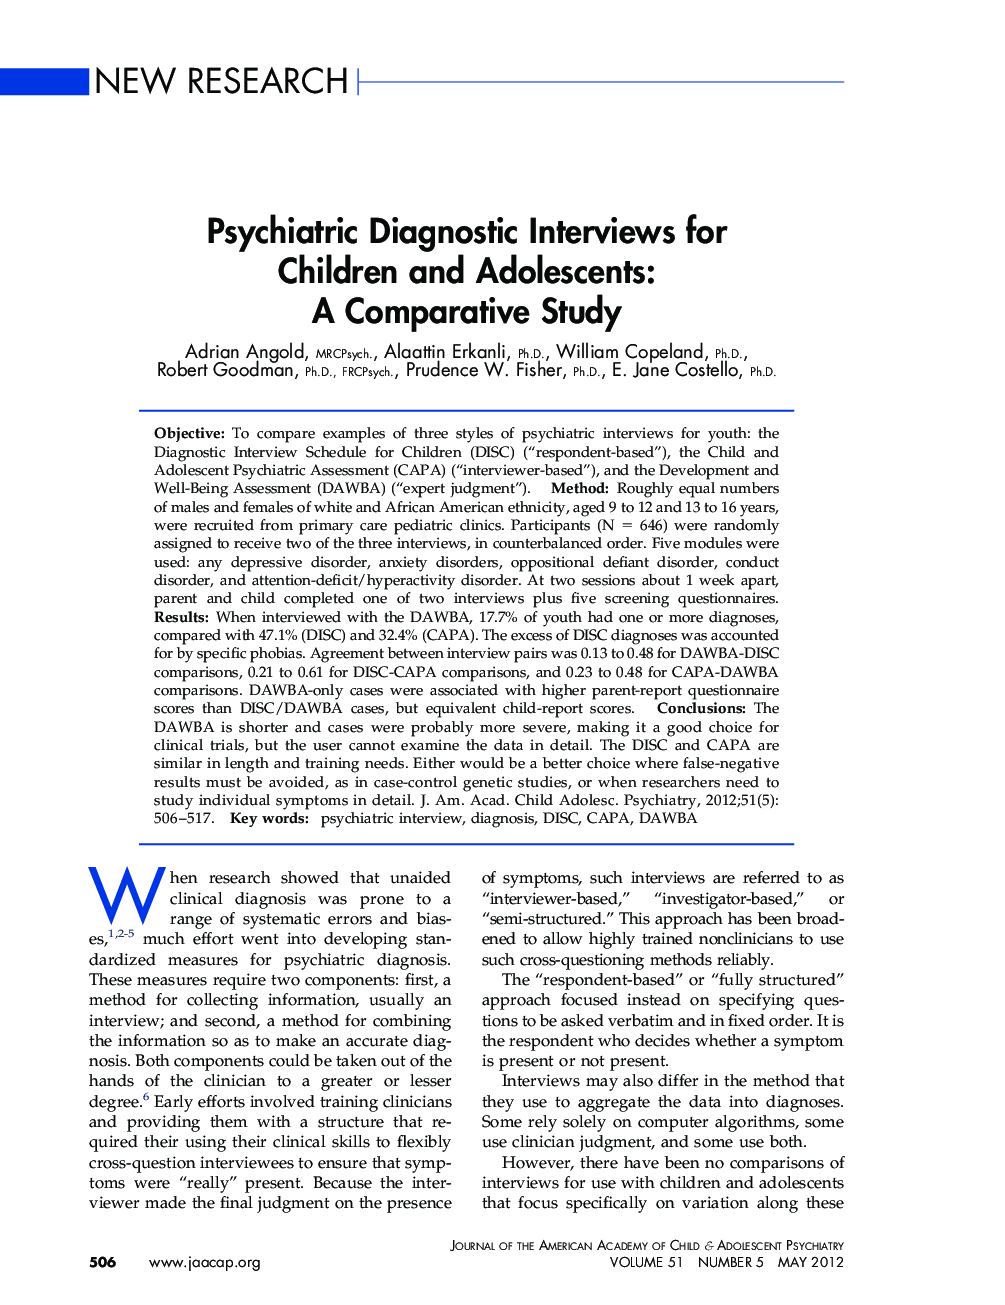 Psychiatric Diagnostic Interviews for Children and Adolescents: A Comparative Study